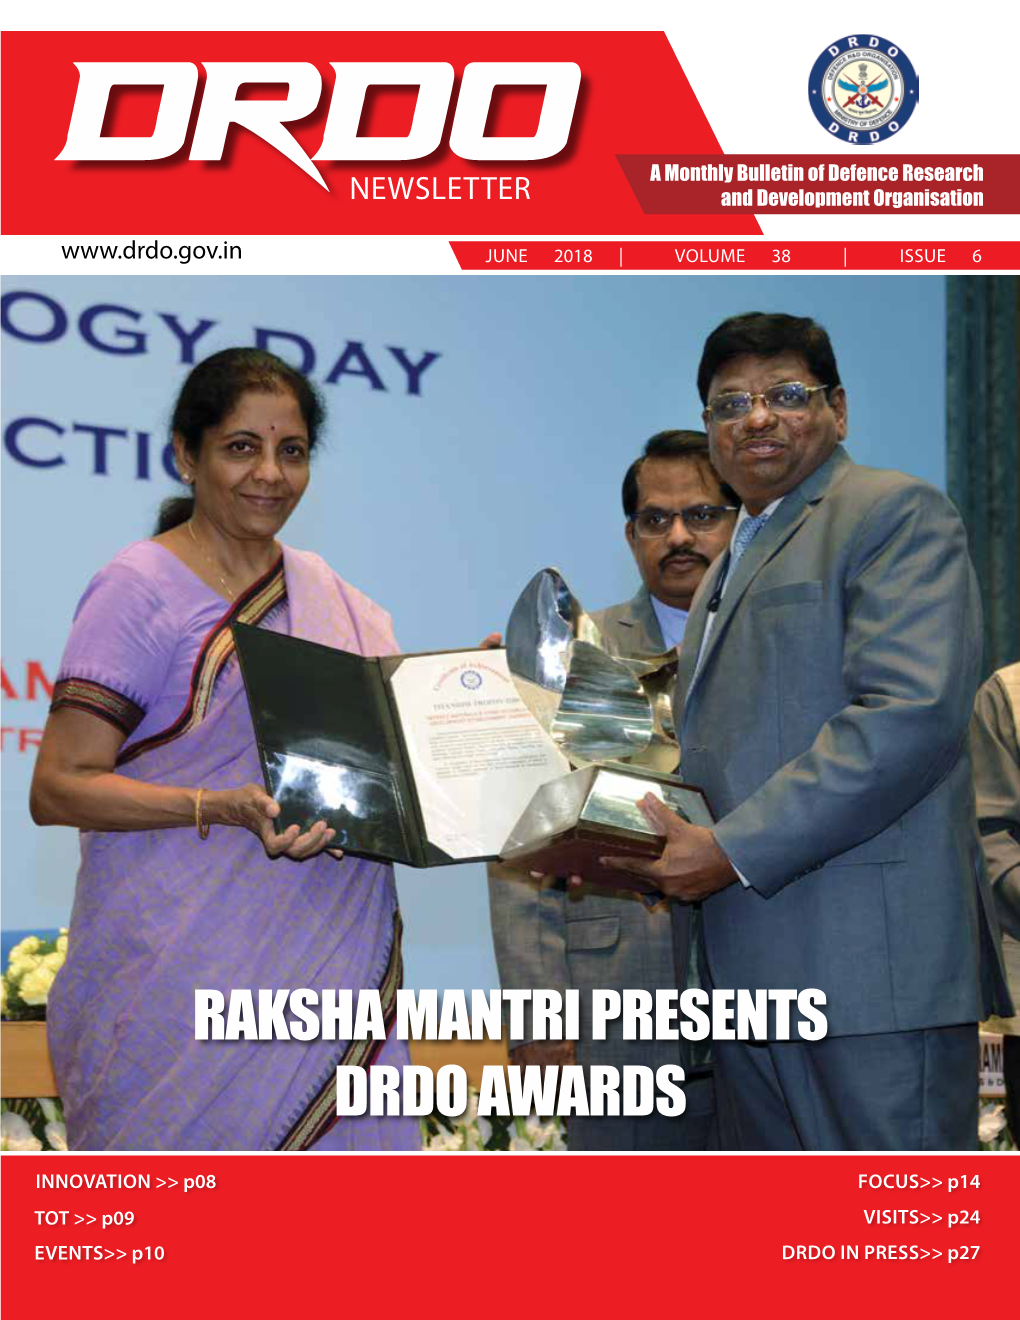 Raksha Mantri Presents Drdo Awards